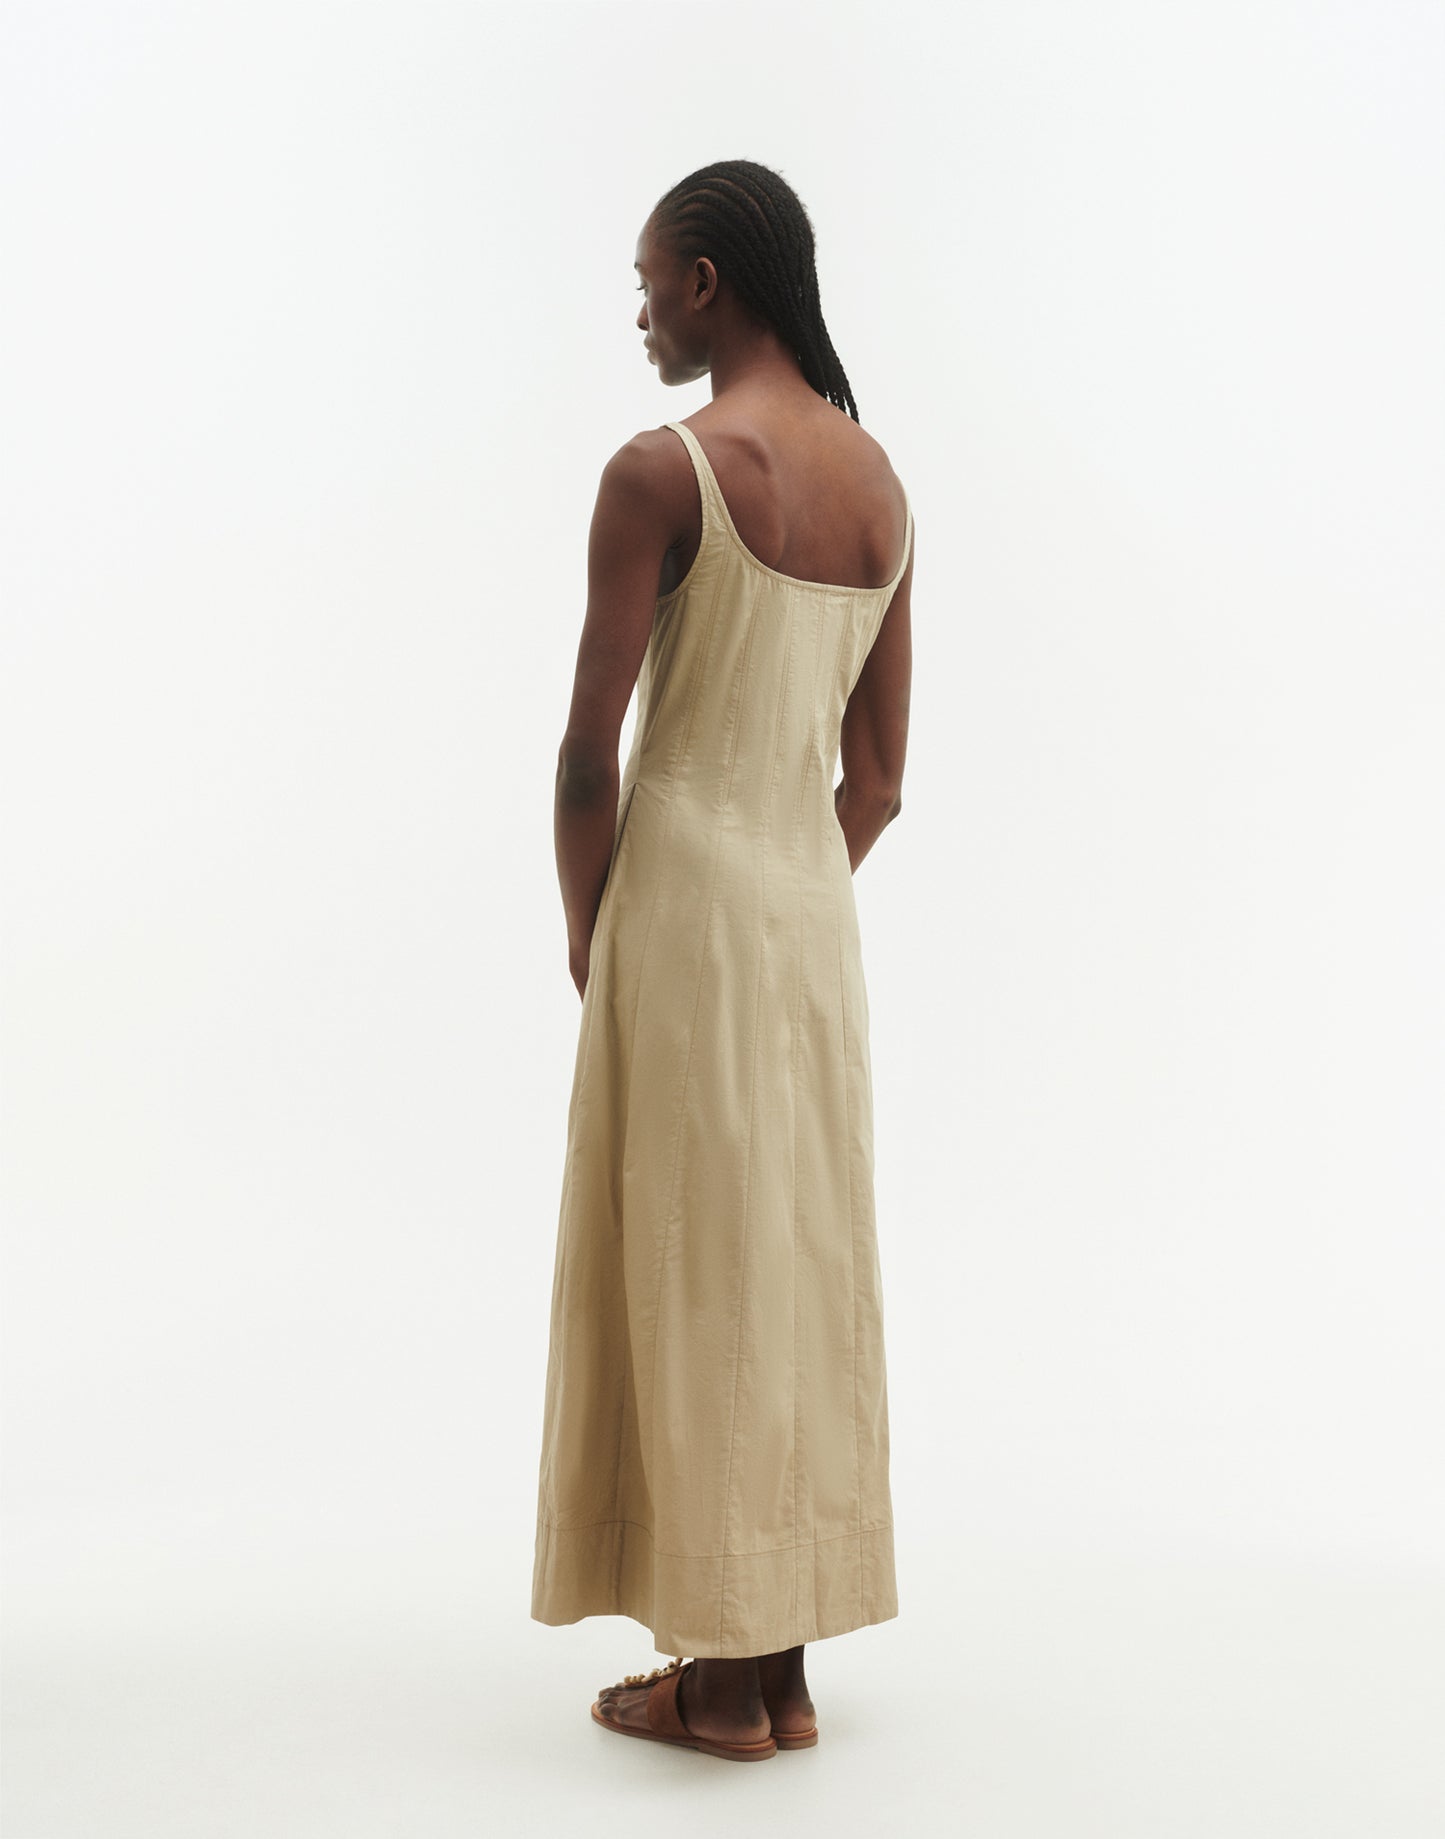 Monterosso dress